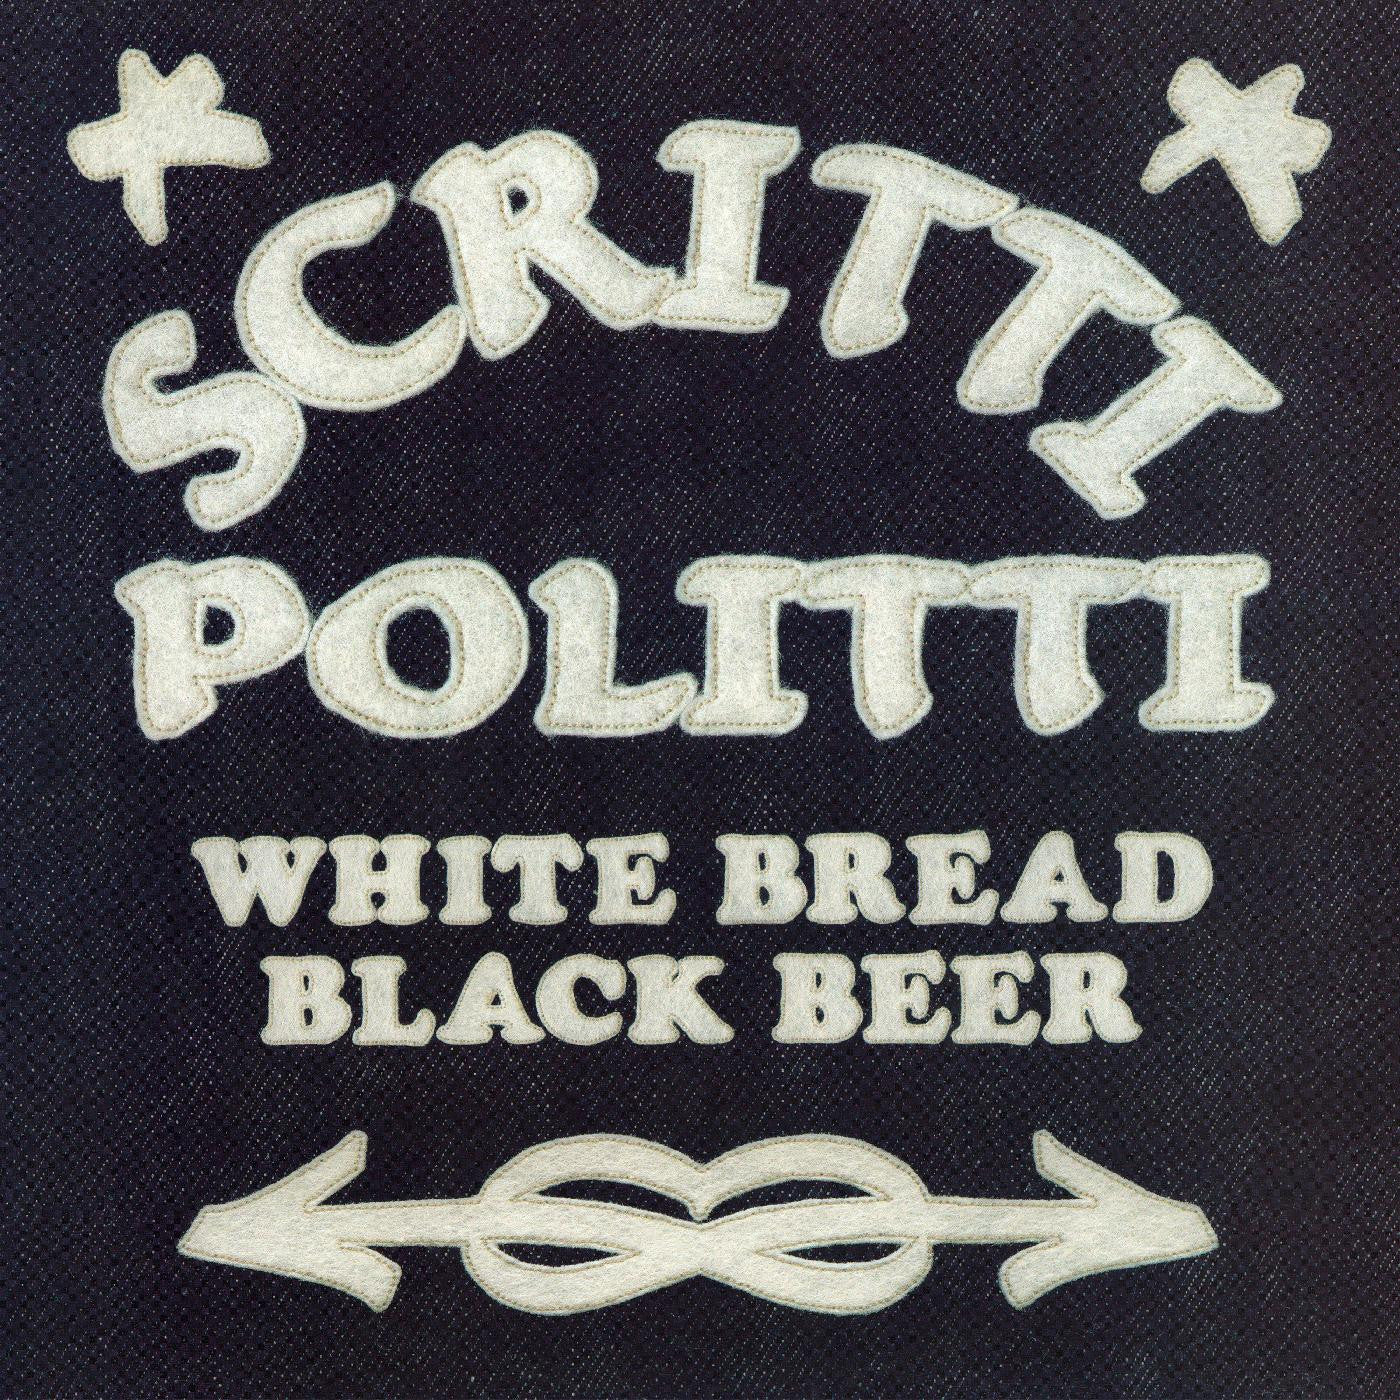 [DAMAGED] Scritti Politti - White Bread Black Beer